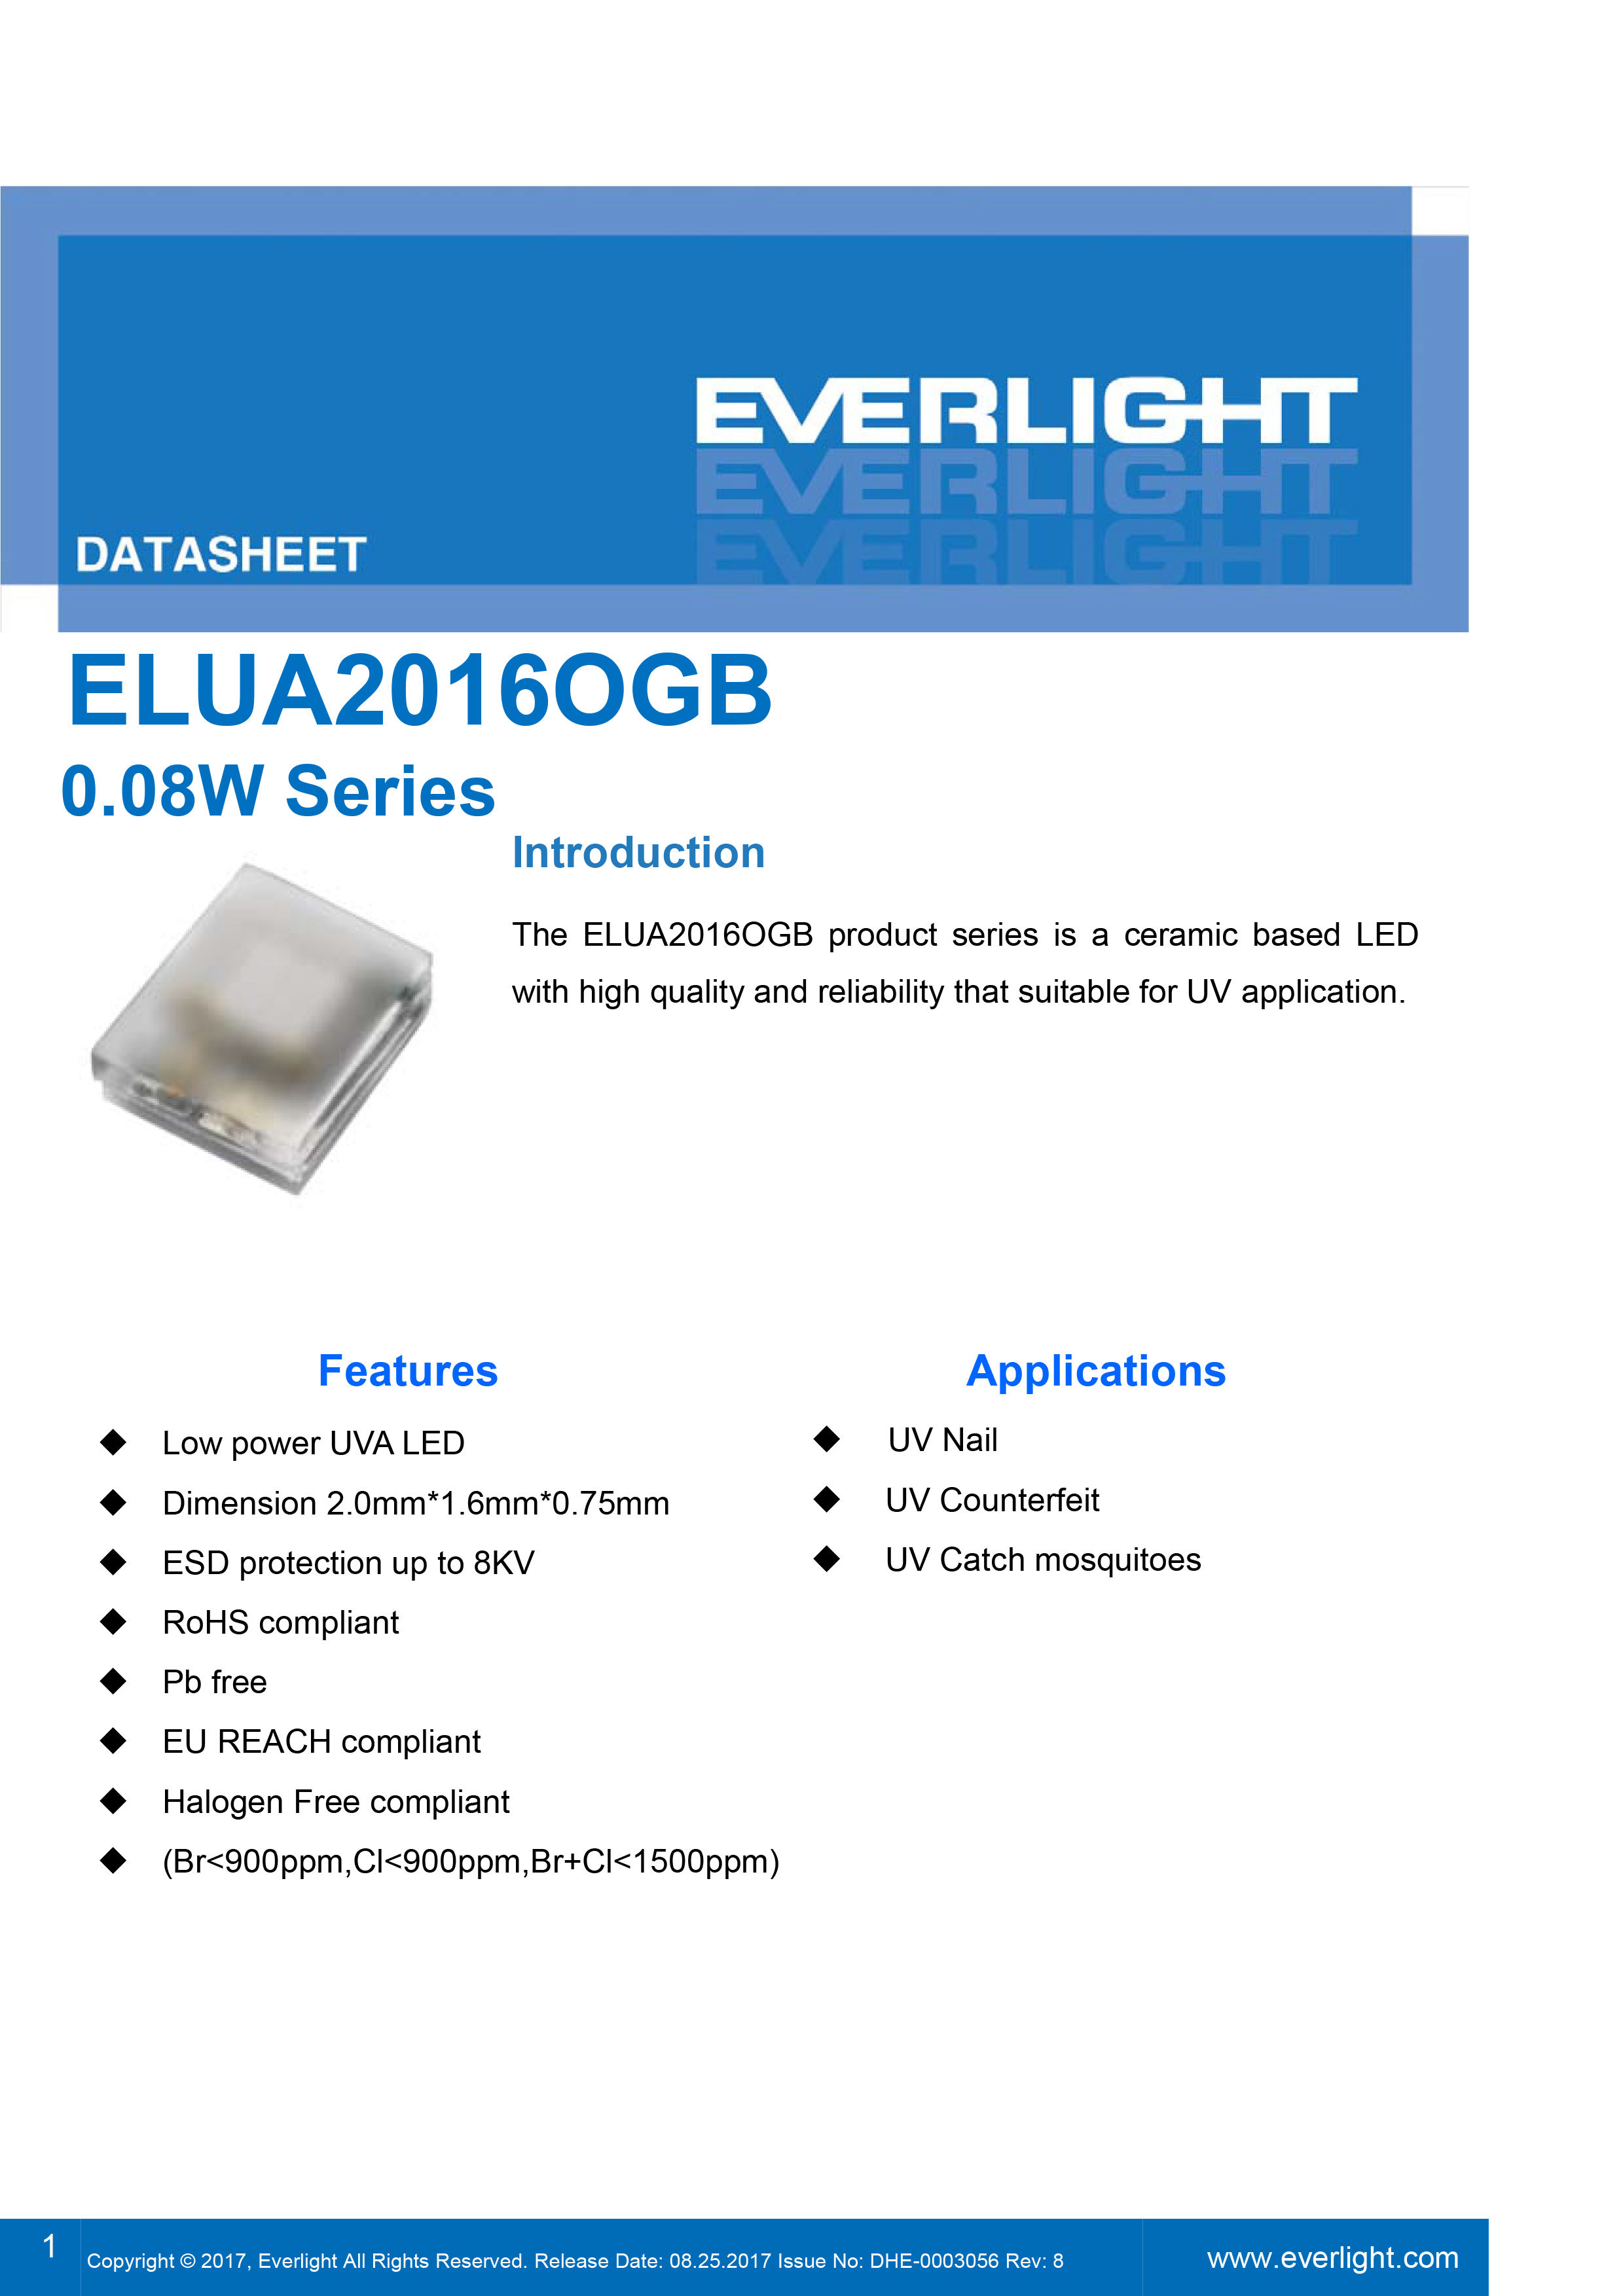 EVERLIGHT SMD 0.08W UV LED ELUA2016OGB-P0010Q53040020-VA1M Datasheet